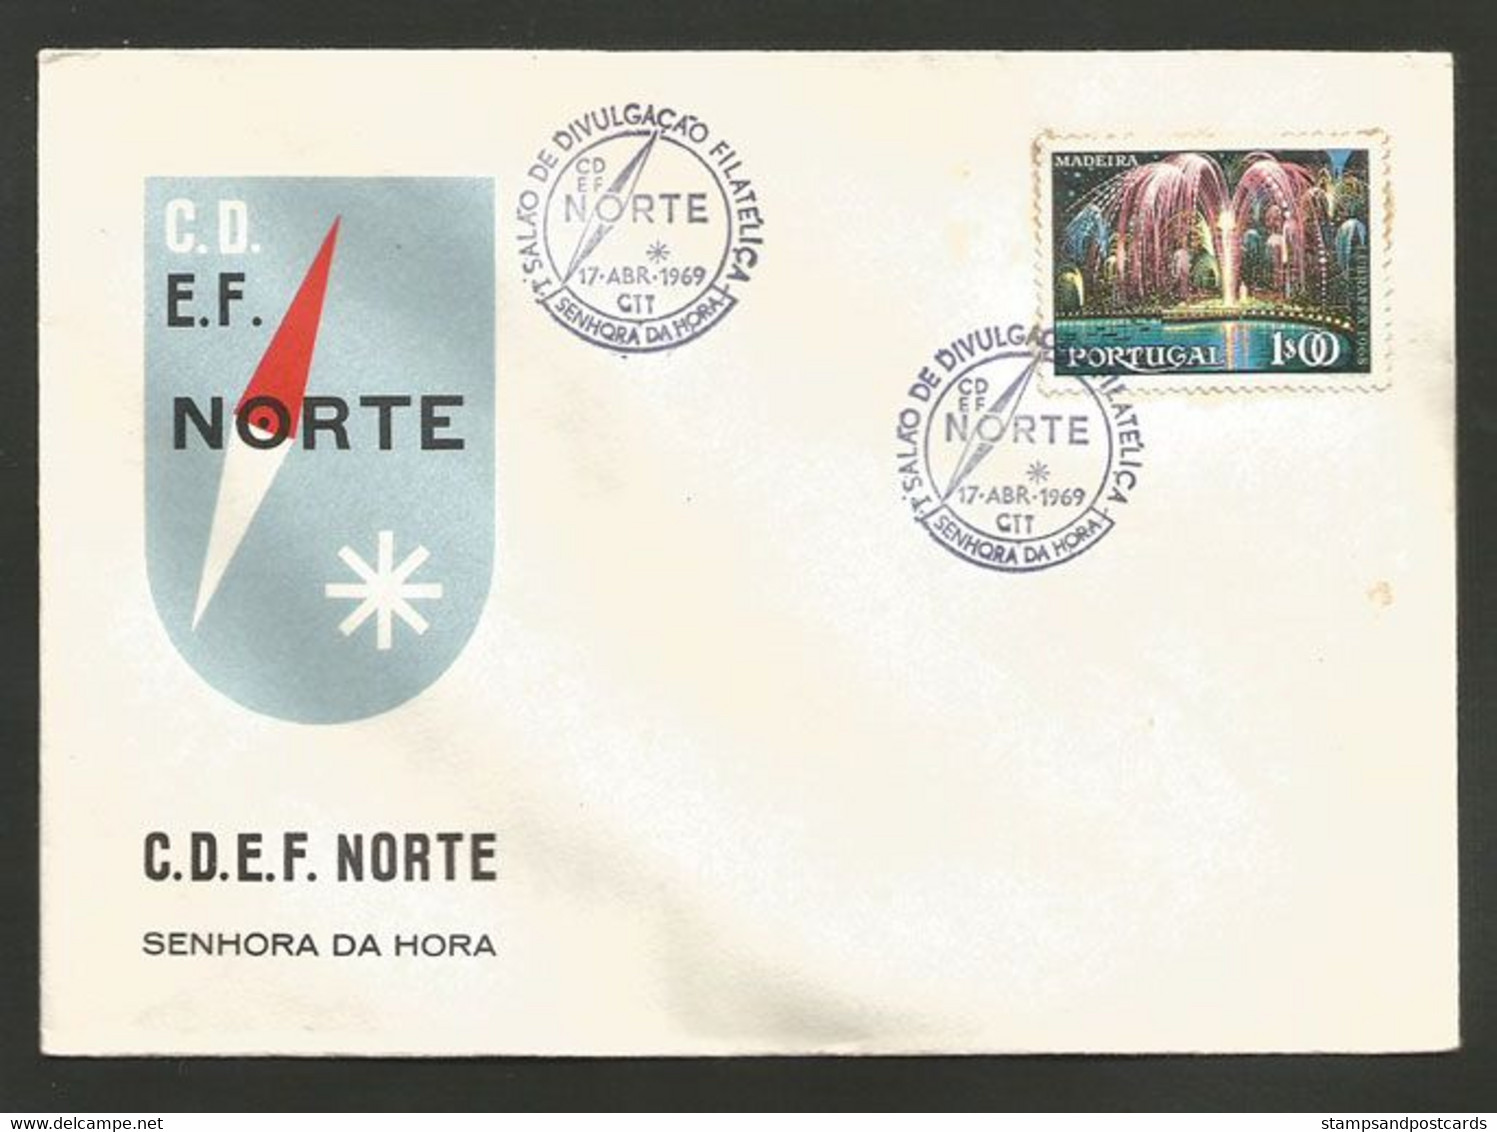 Portugal Cachet Commemoratif Expo Philatelique Senhora Da Hora Matosinhos 1969 Philatelic Expo Event Postmark - Postal Logo & Postmarks